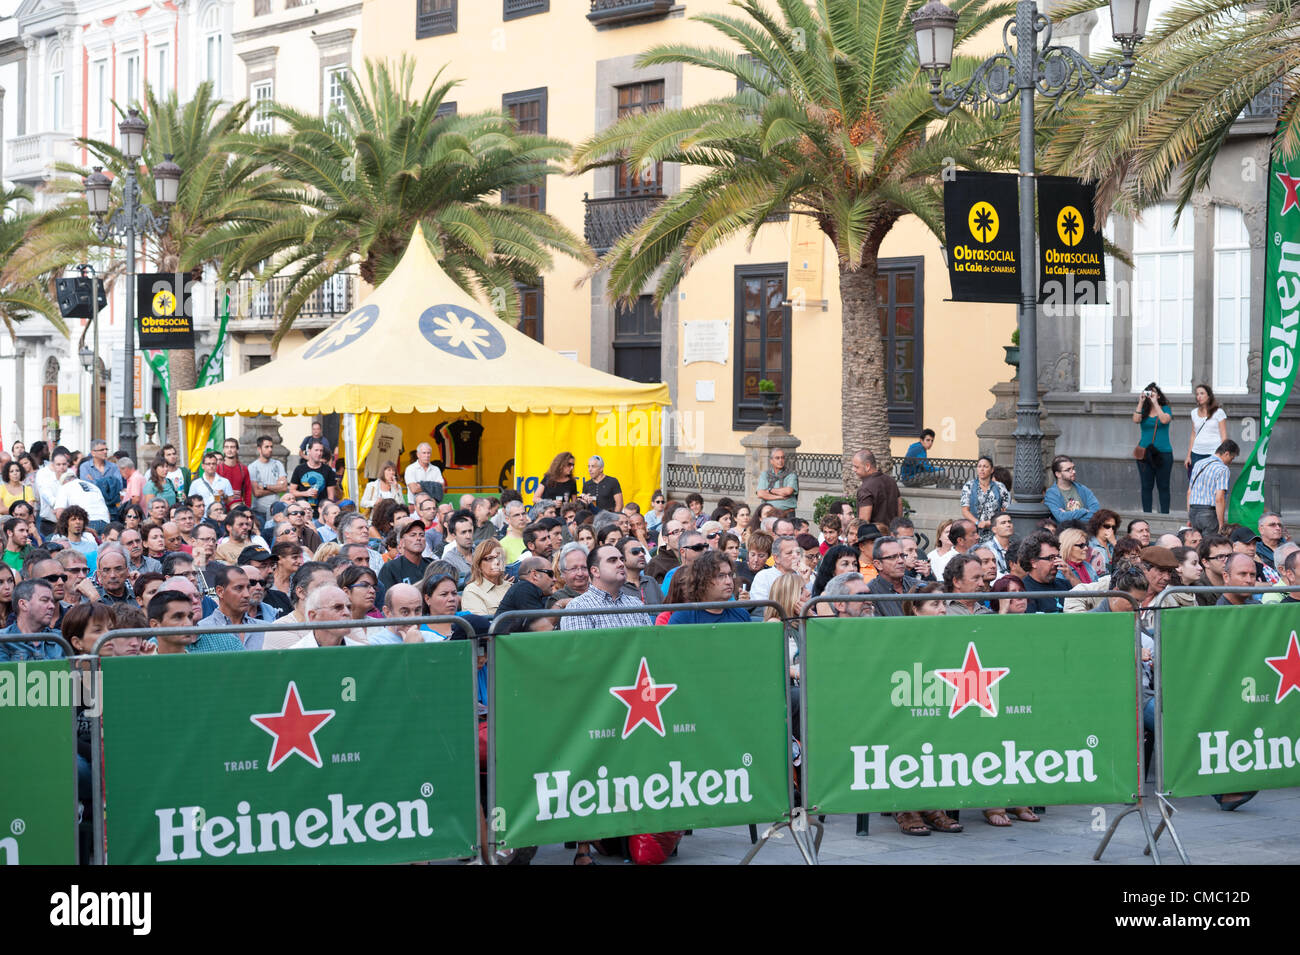 July 13, 2012 – Las Palmas, Canary Islands, Spain – An audience during festival international canarias jazz & mas Heineken, in Plaza Santa Ana, Las Palmas, Canary Islands, on Friday 13 July 2012. Stock Photo